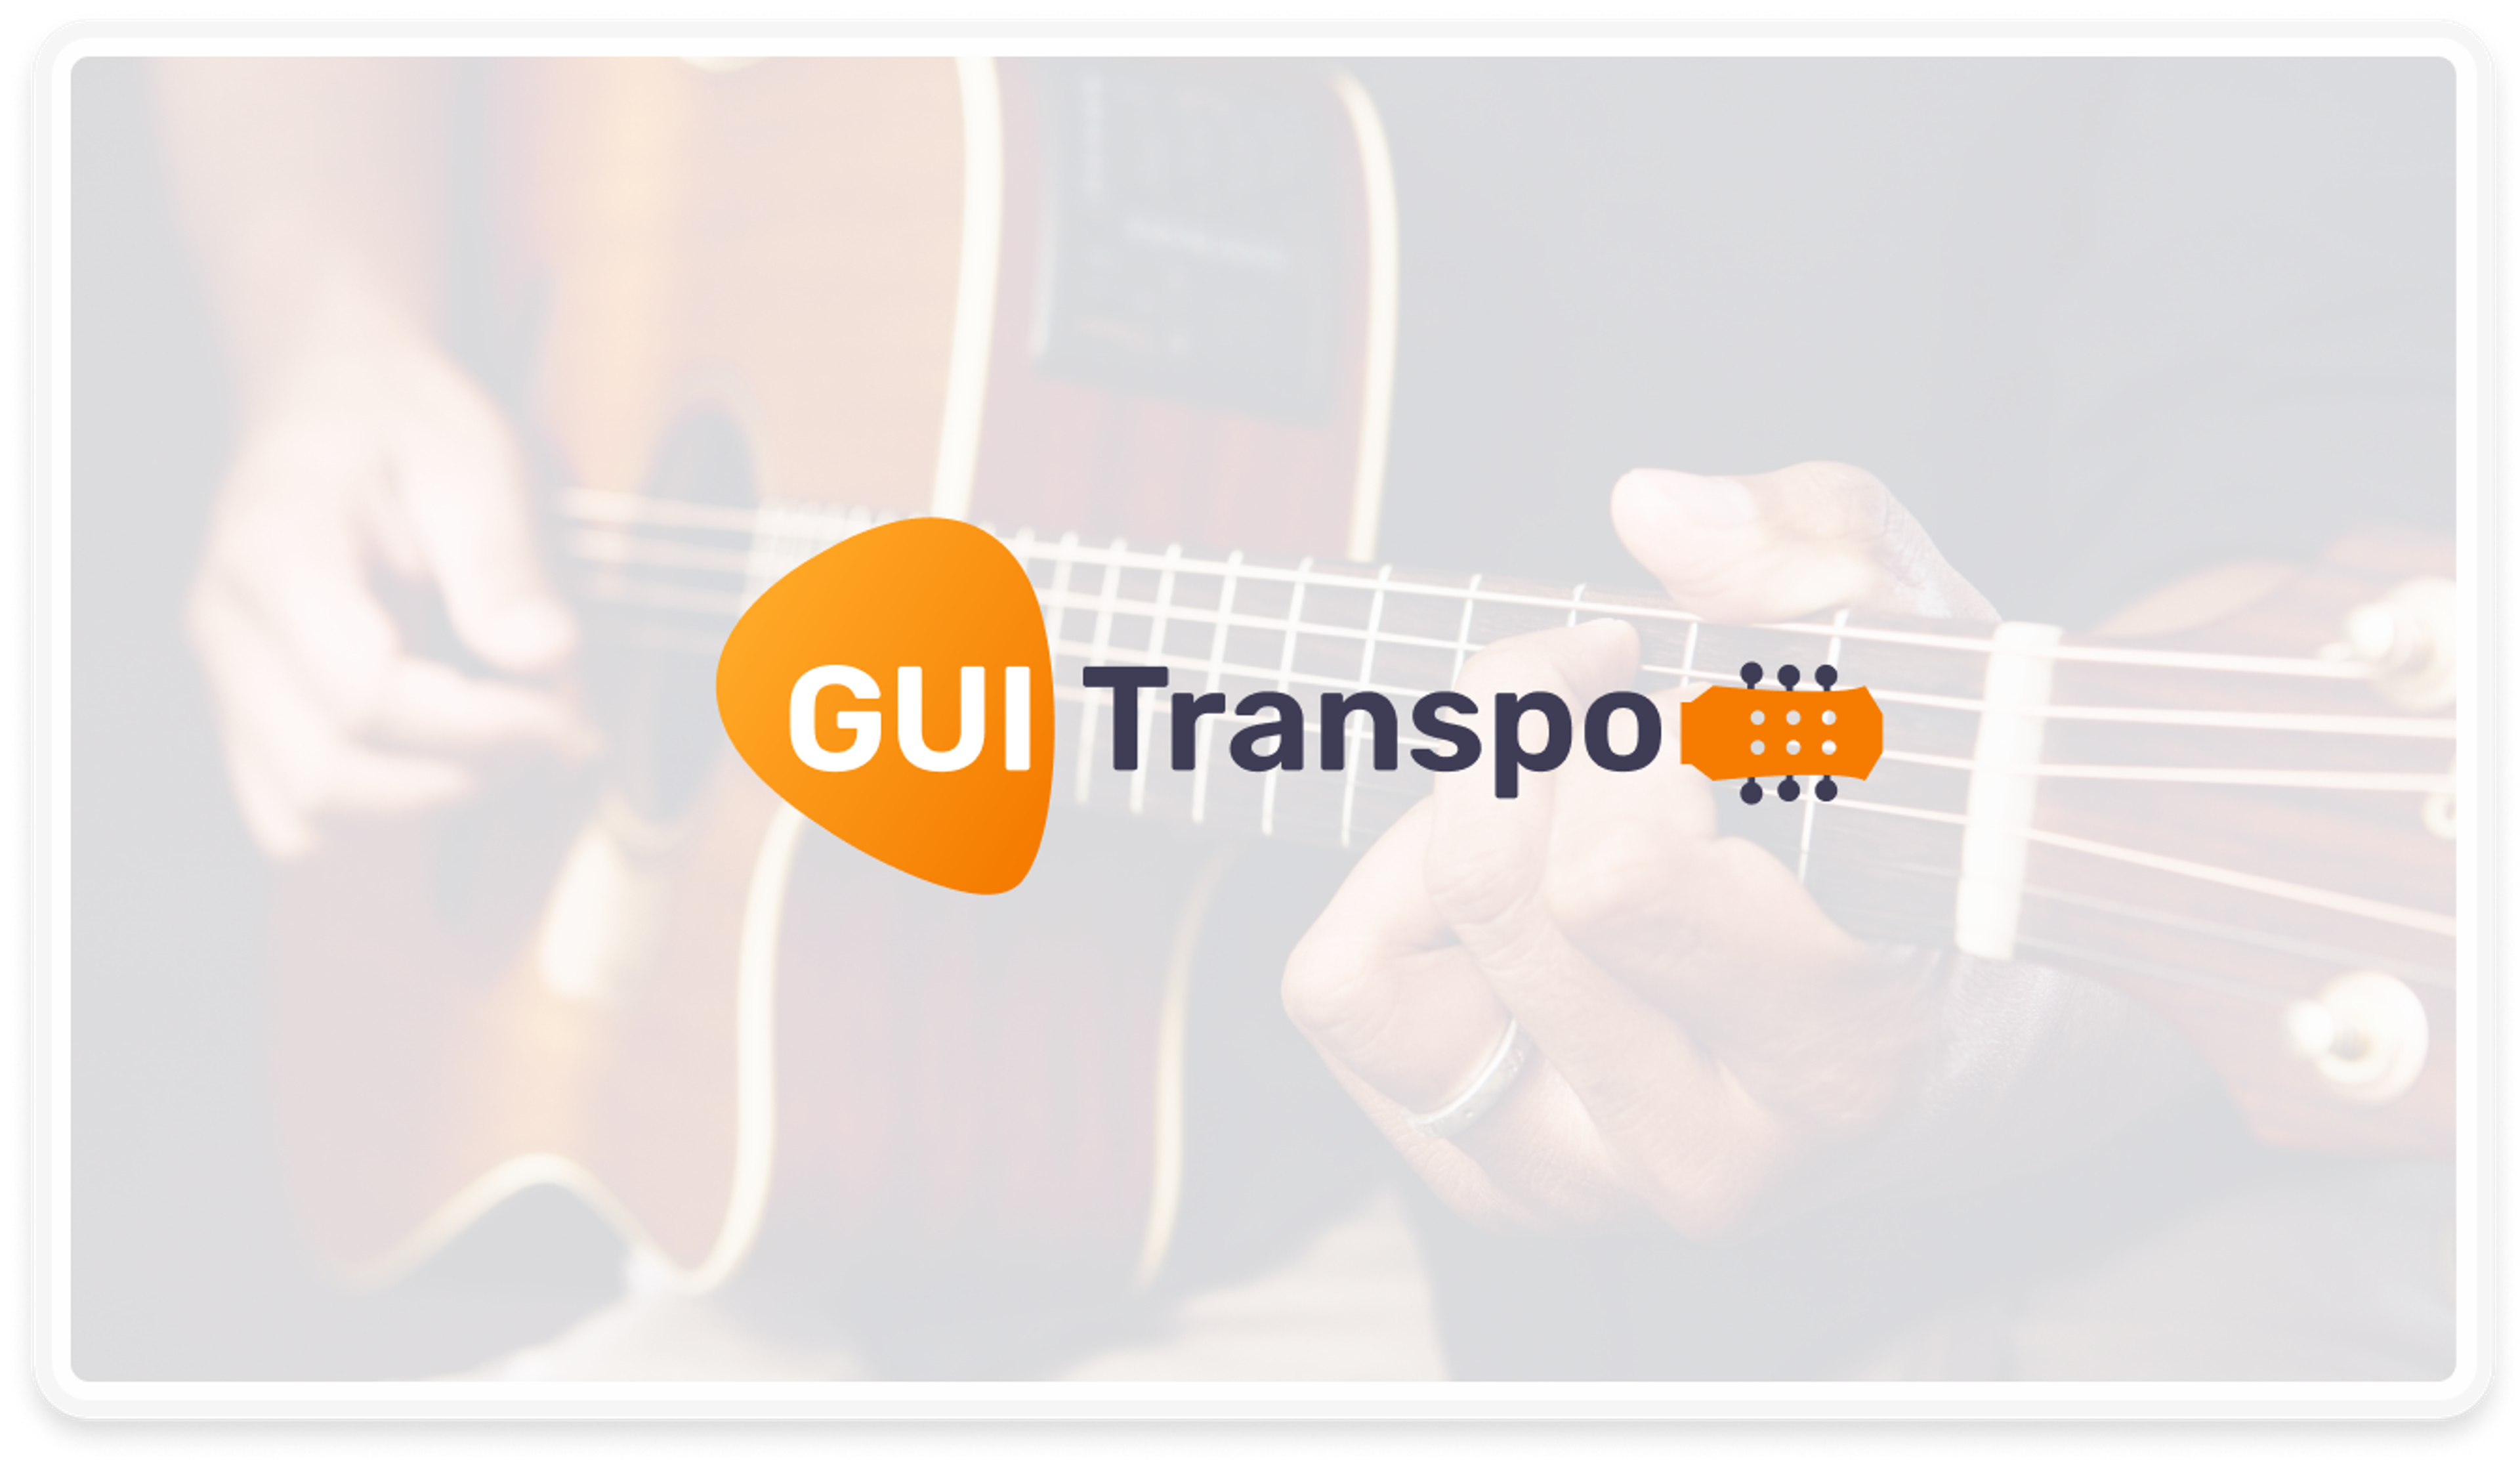 Gui-Transpo project